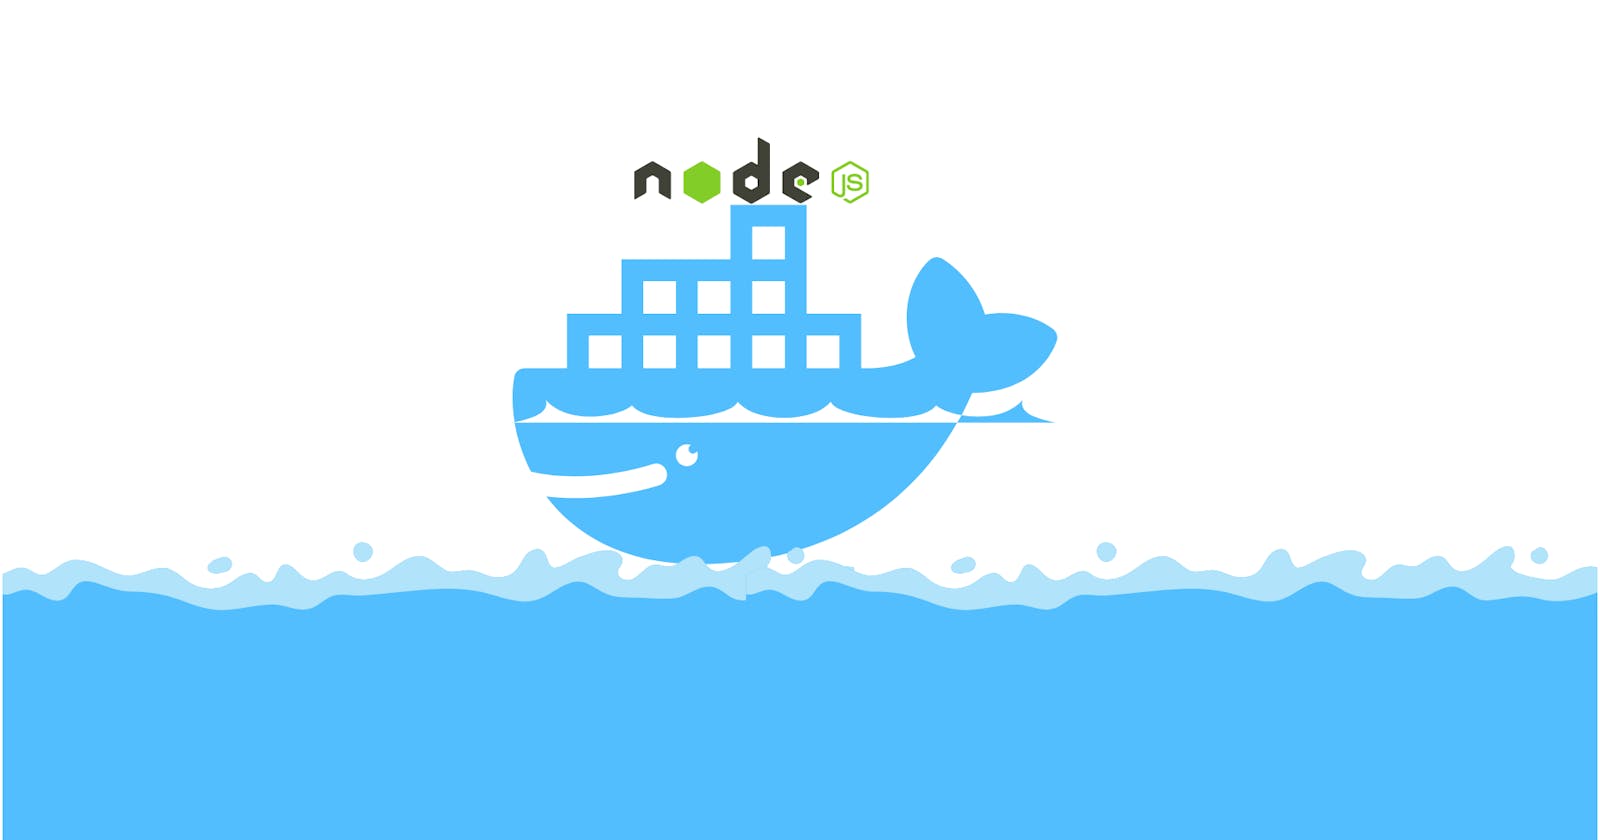 Dockerizing Your Node.js Application